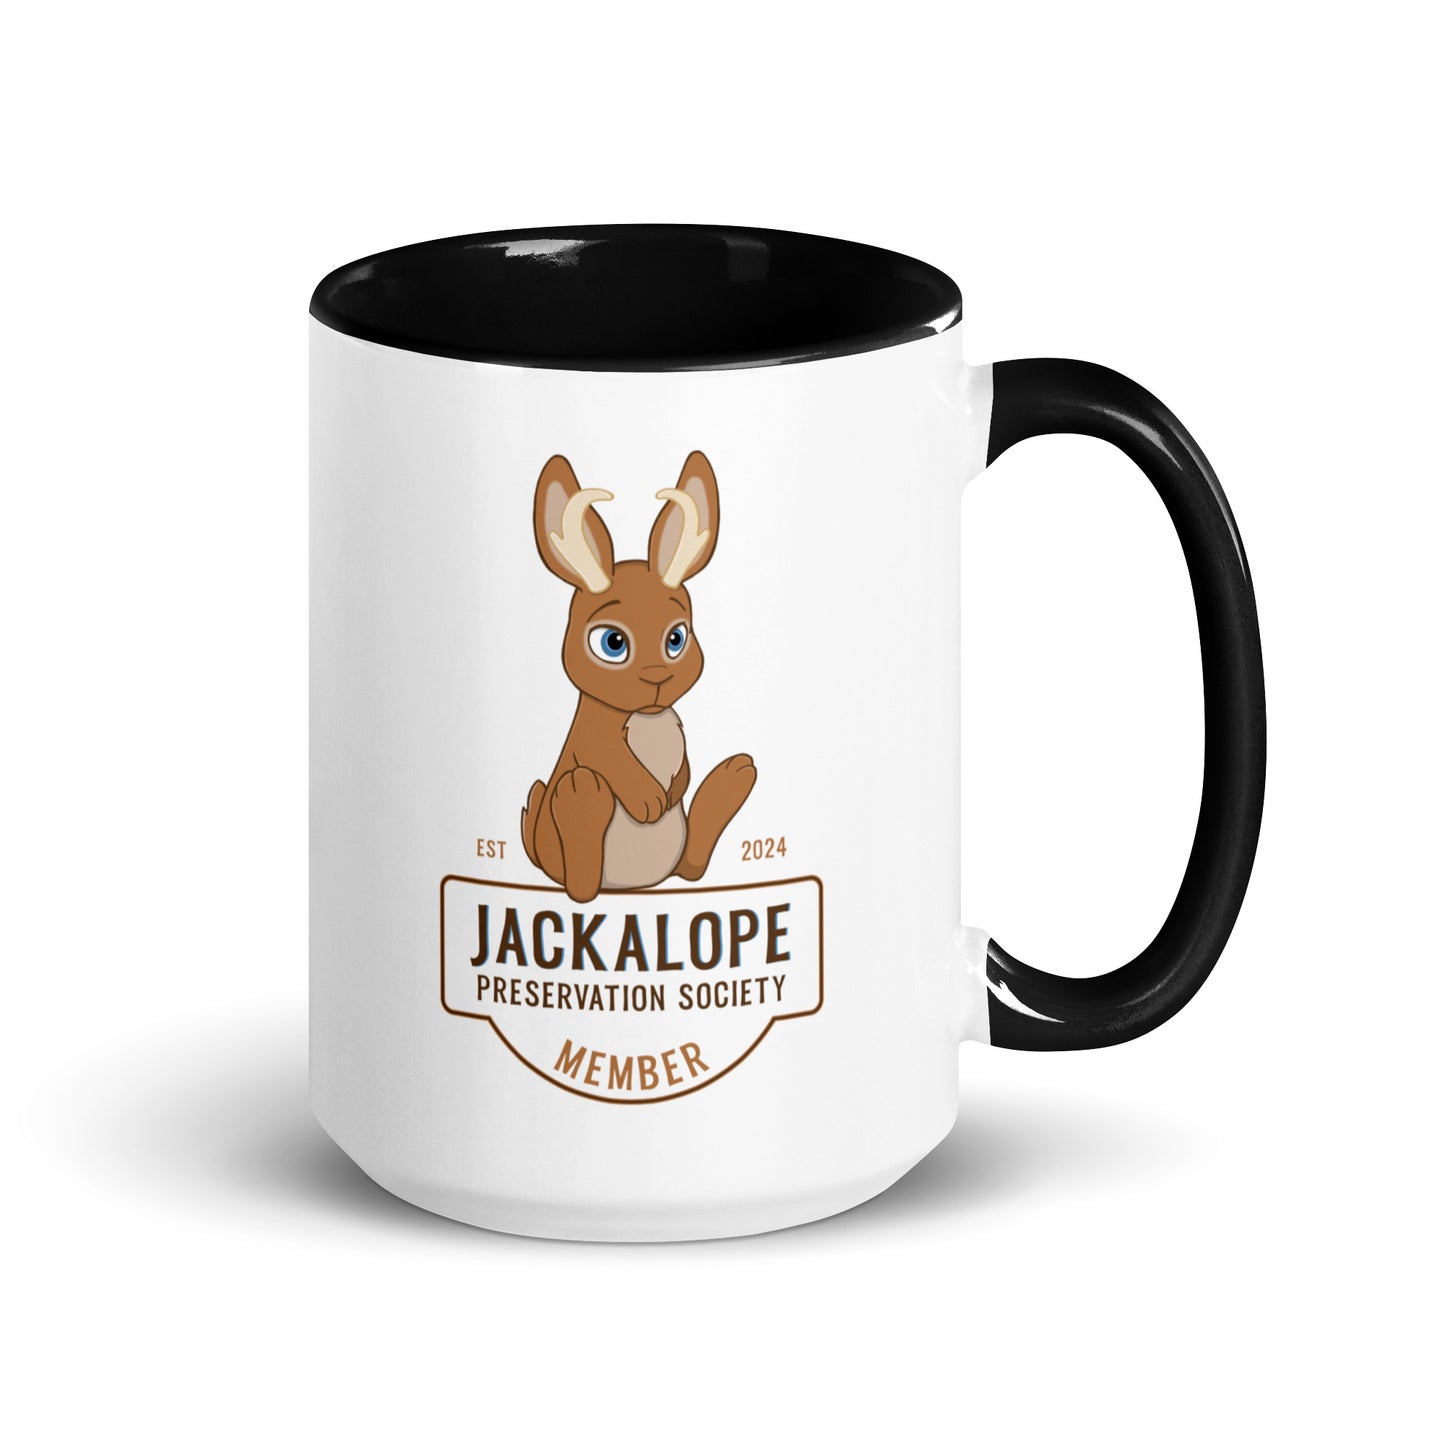 Jackalope Preservation Society Mug in two sizes